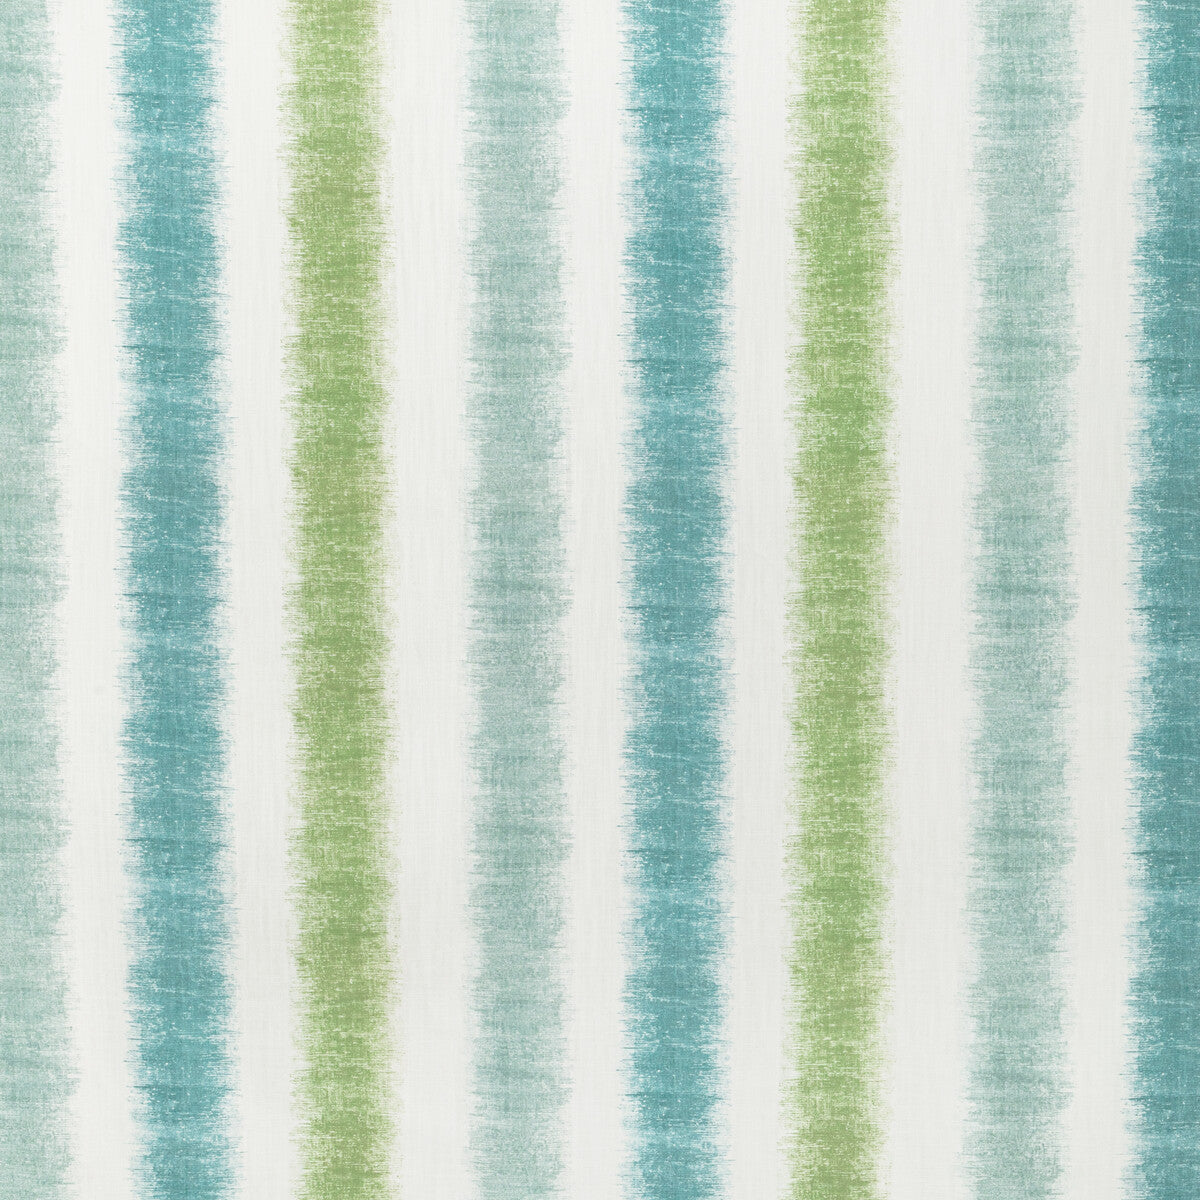 Raipur fabric in lagoon color - pattern RAIPUR.135.0 - by Kravet Basics